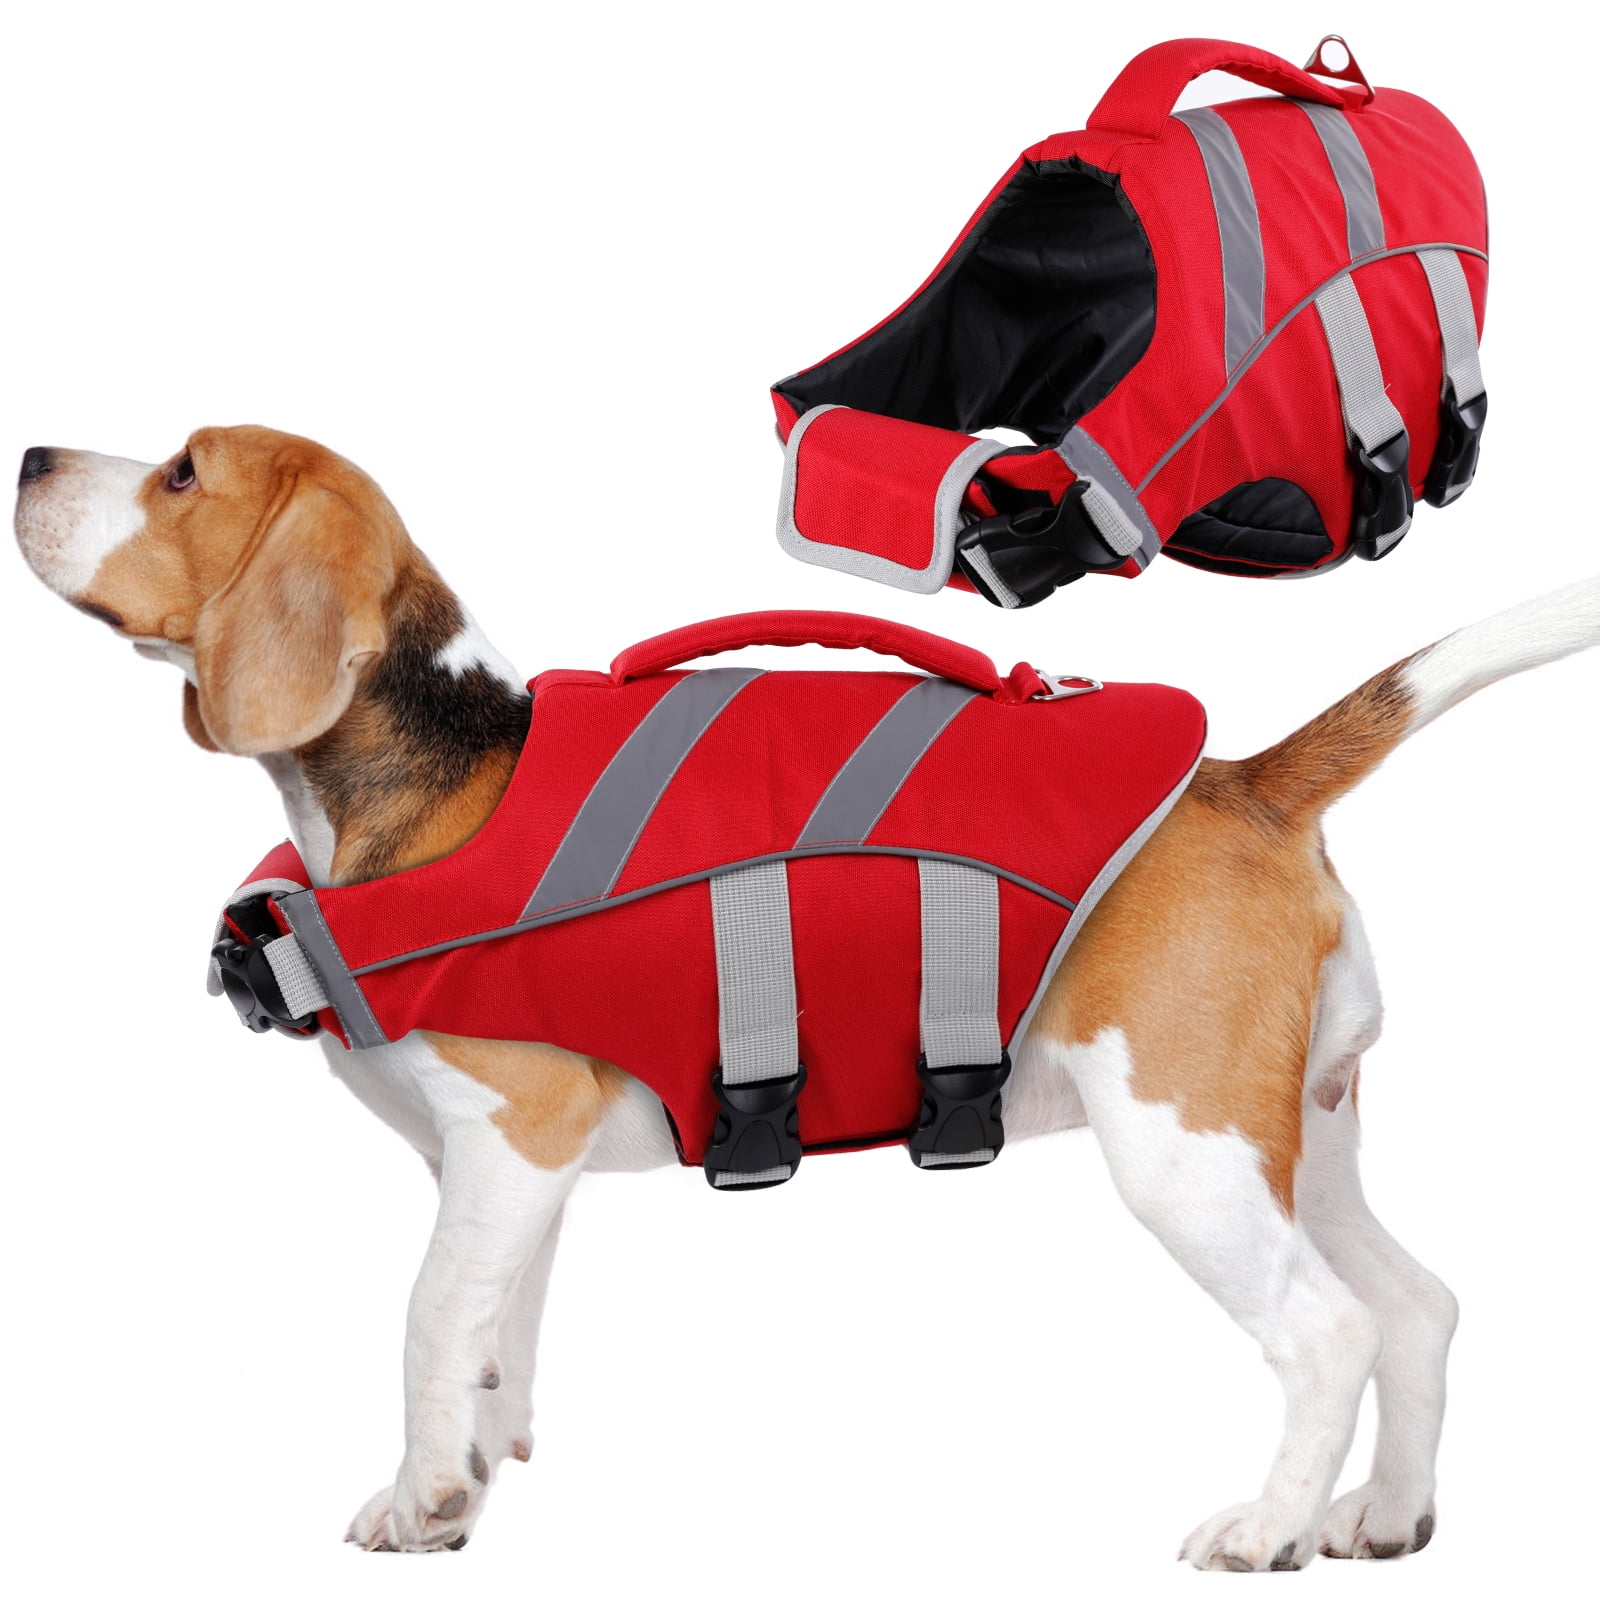 KDKDA Outward Hound Splash Dog Life Jacket Giacche di Vita per Cani Pet Dog Swimming Life Jacket Lifesaver Giubbotto Riflettente Coat Regolabile per Il Nuoto Surf Canottaggio